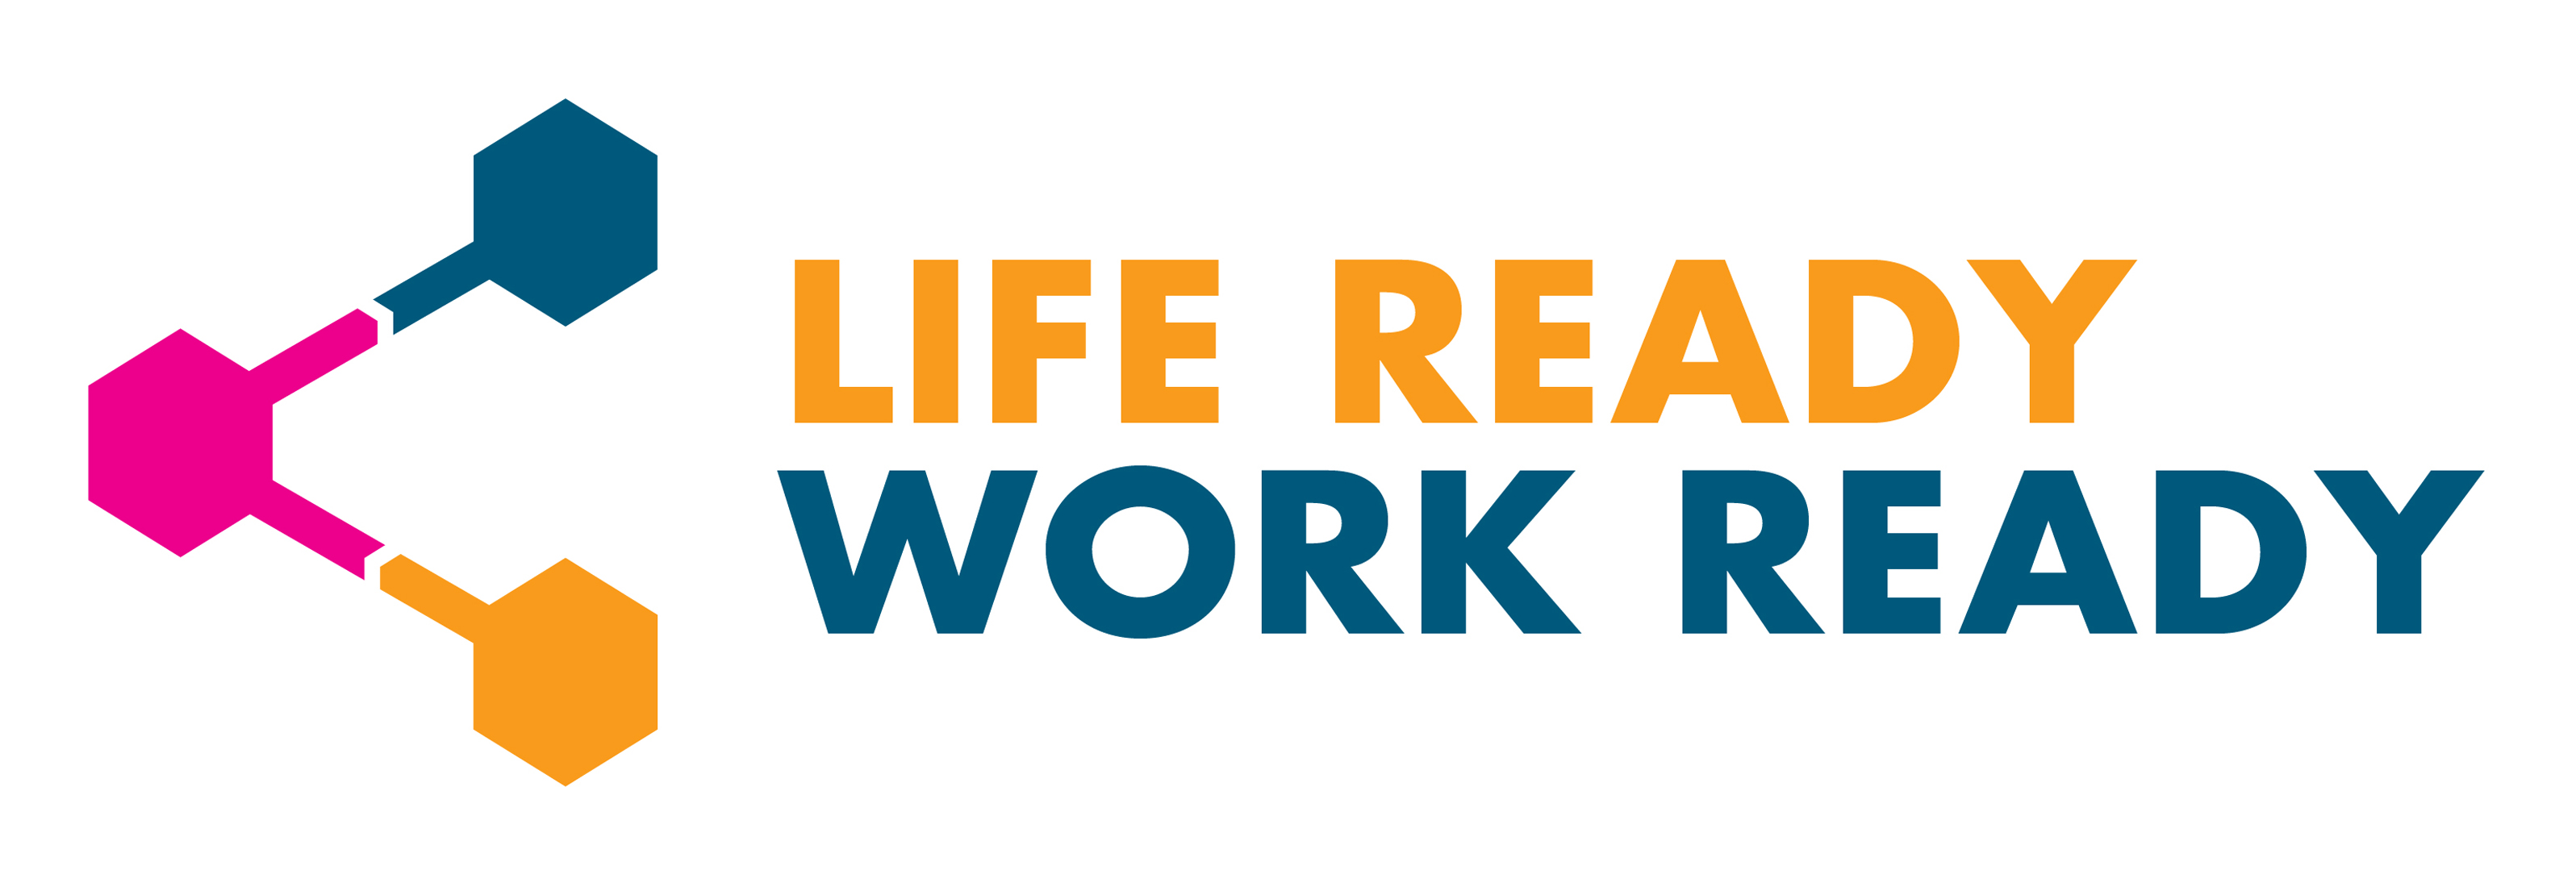 Life ready work ready logo